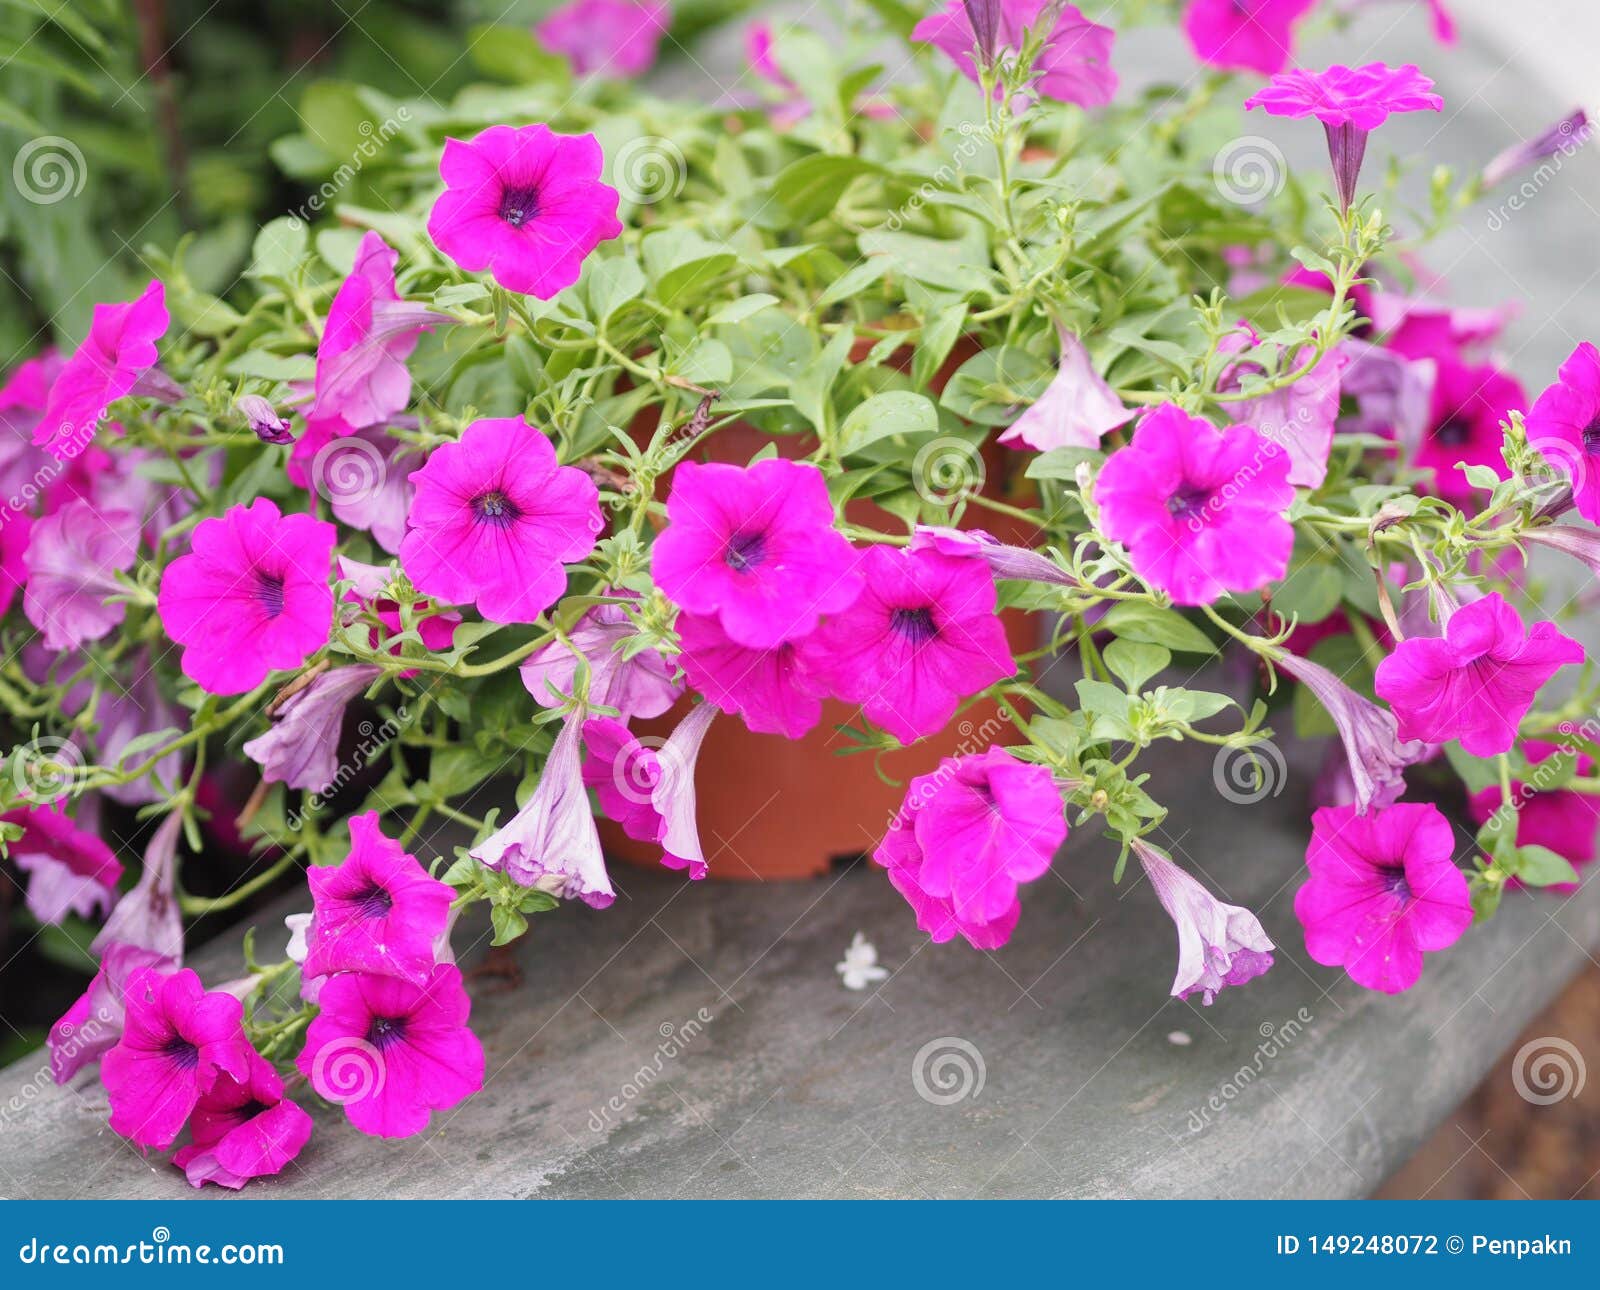 Petunia Easy Wave Bergundy Verlour Name Magenta Pink Flower Stock Photo ...